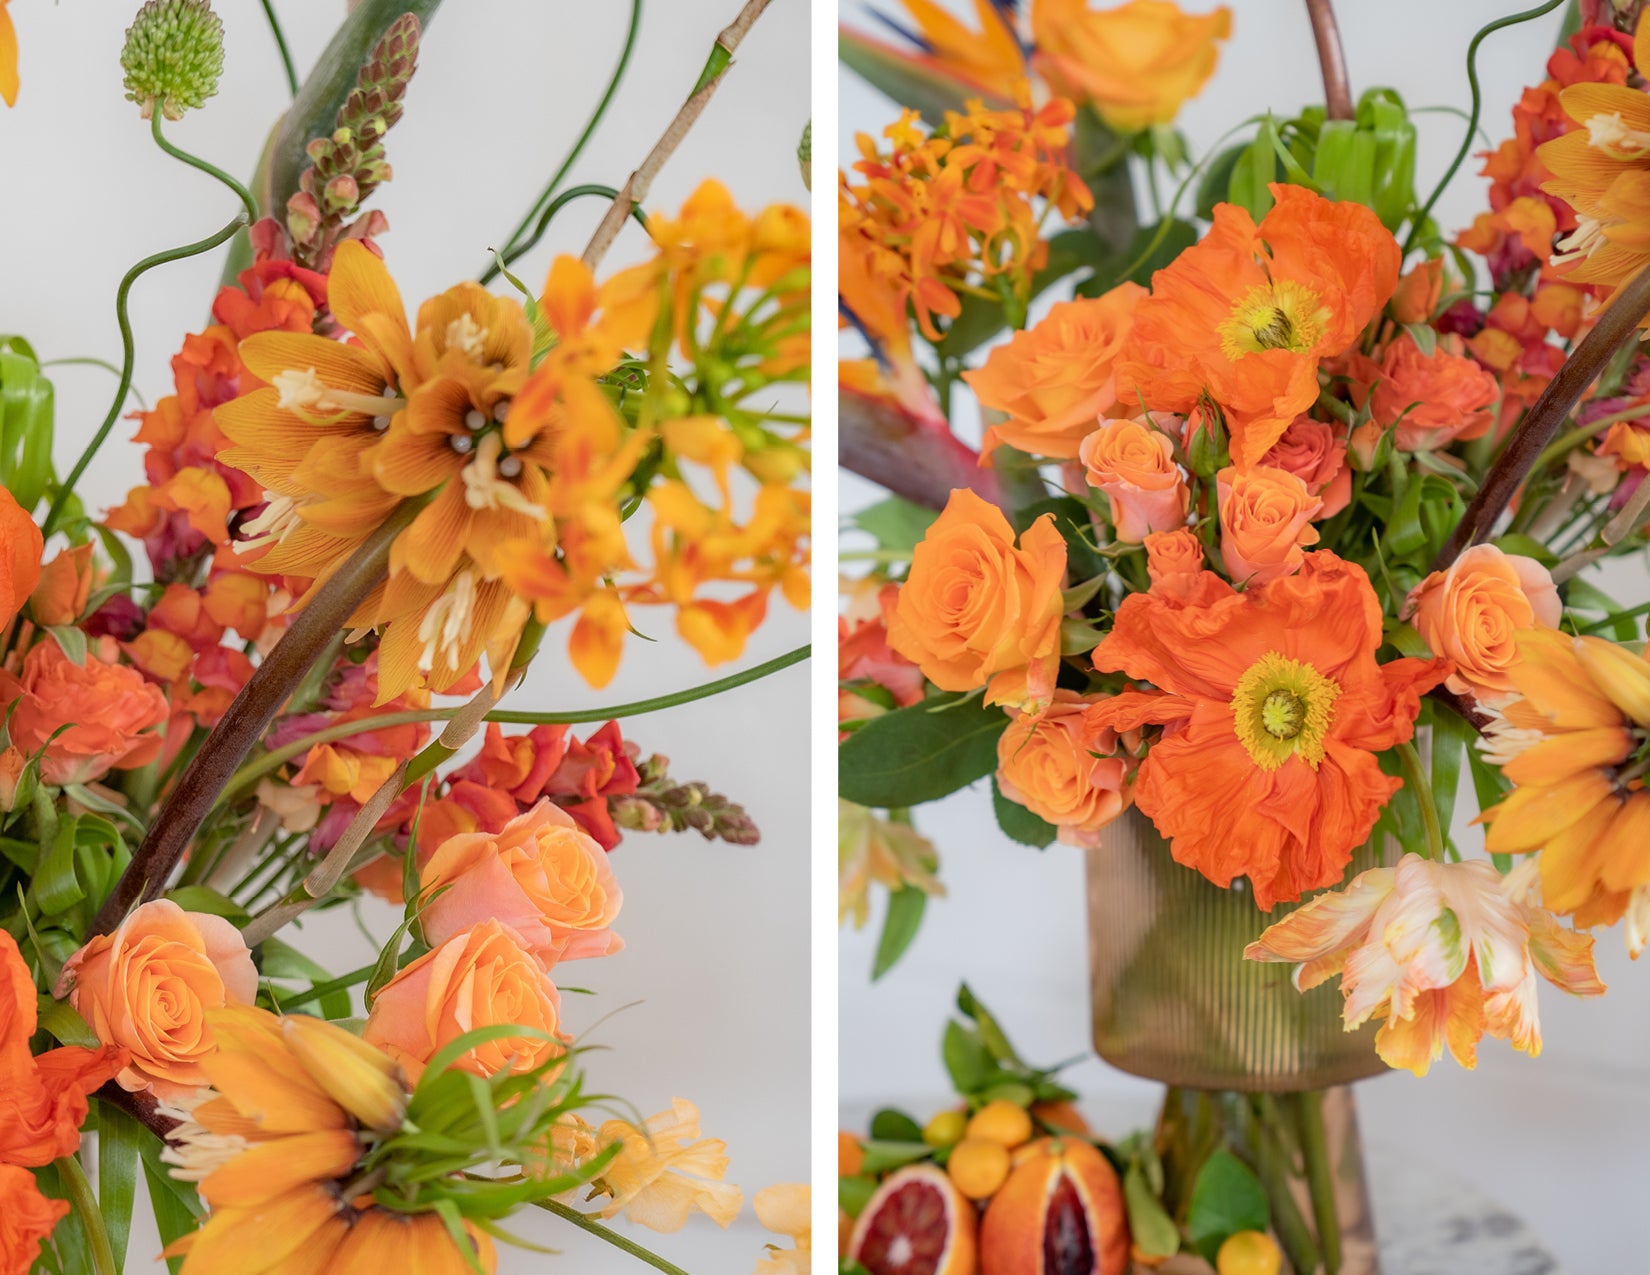 wildflora custom vase blog orange flowers poppy fritillaria snapdragon rose bird of paradise tropical citrus